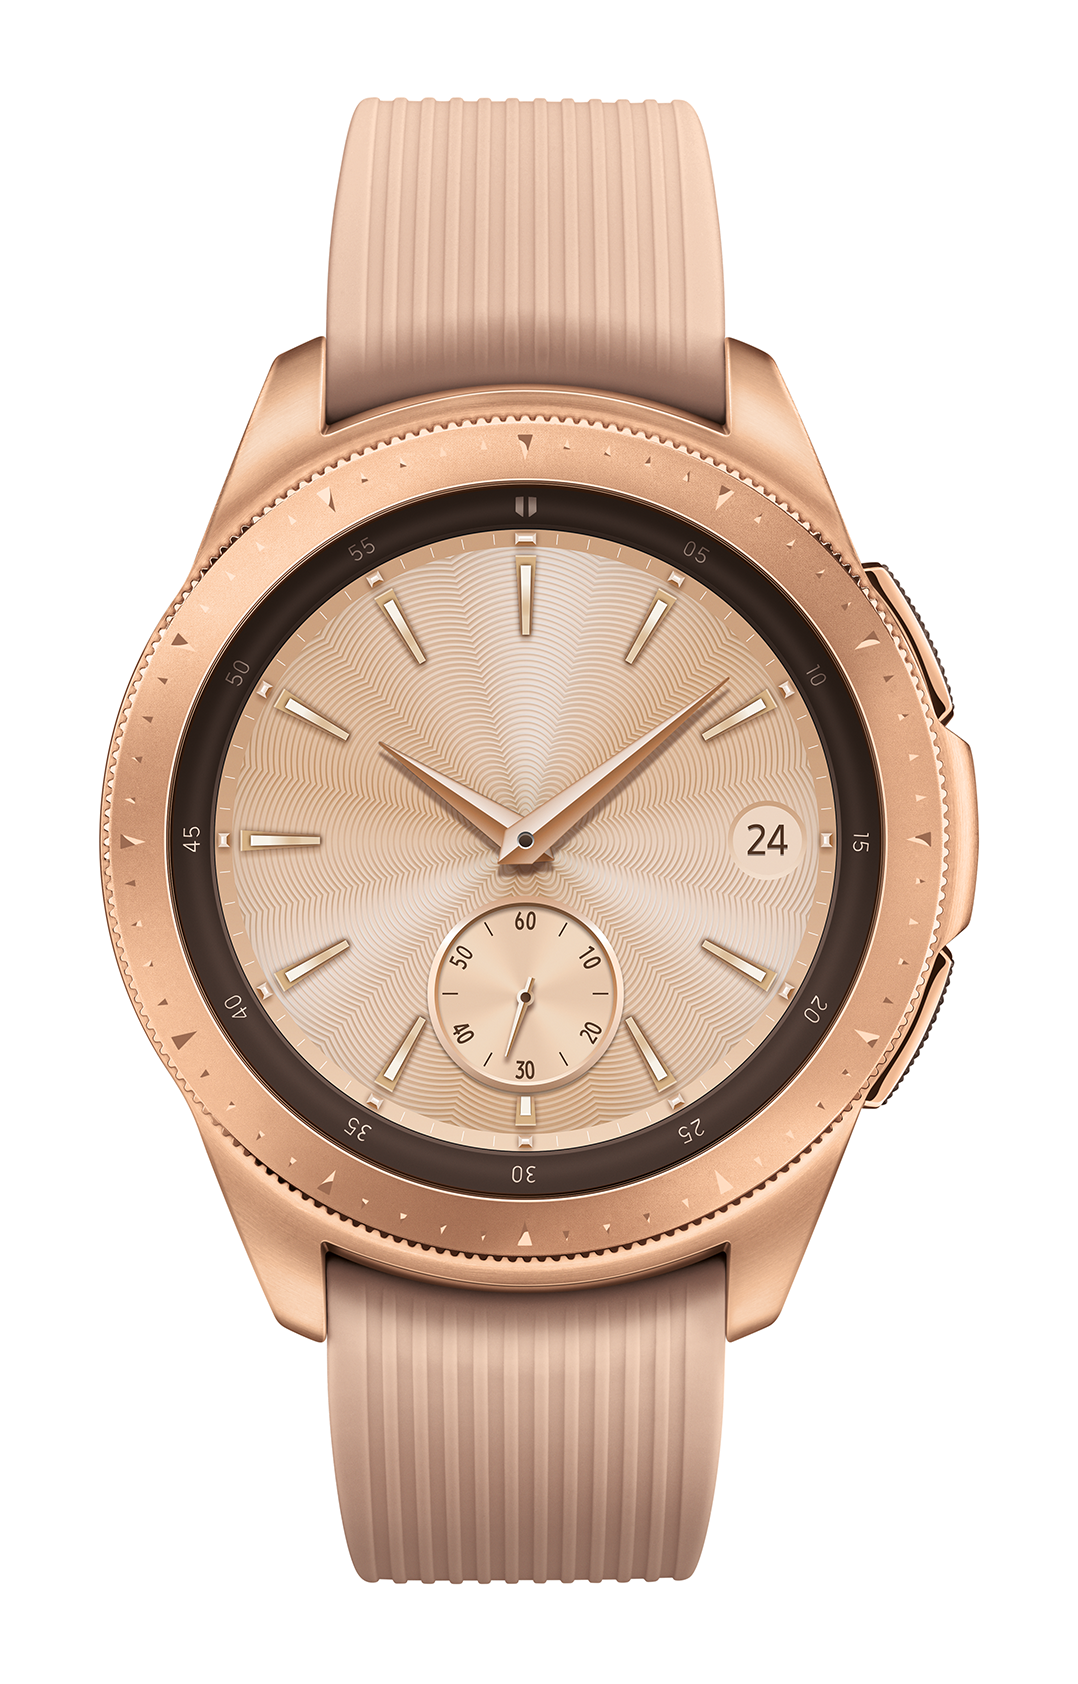 SAMSUNG Galaxy Watch - Bluetooth Smart Watch (42 mm) - Rose Gold - SM-R810NZDAXAR - image 1 of 15